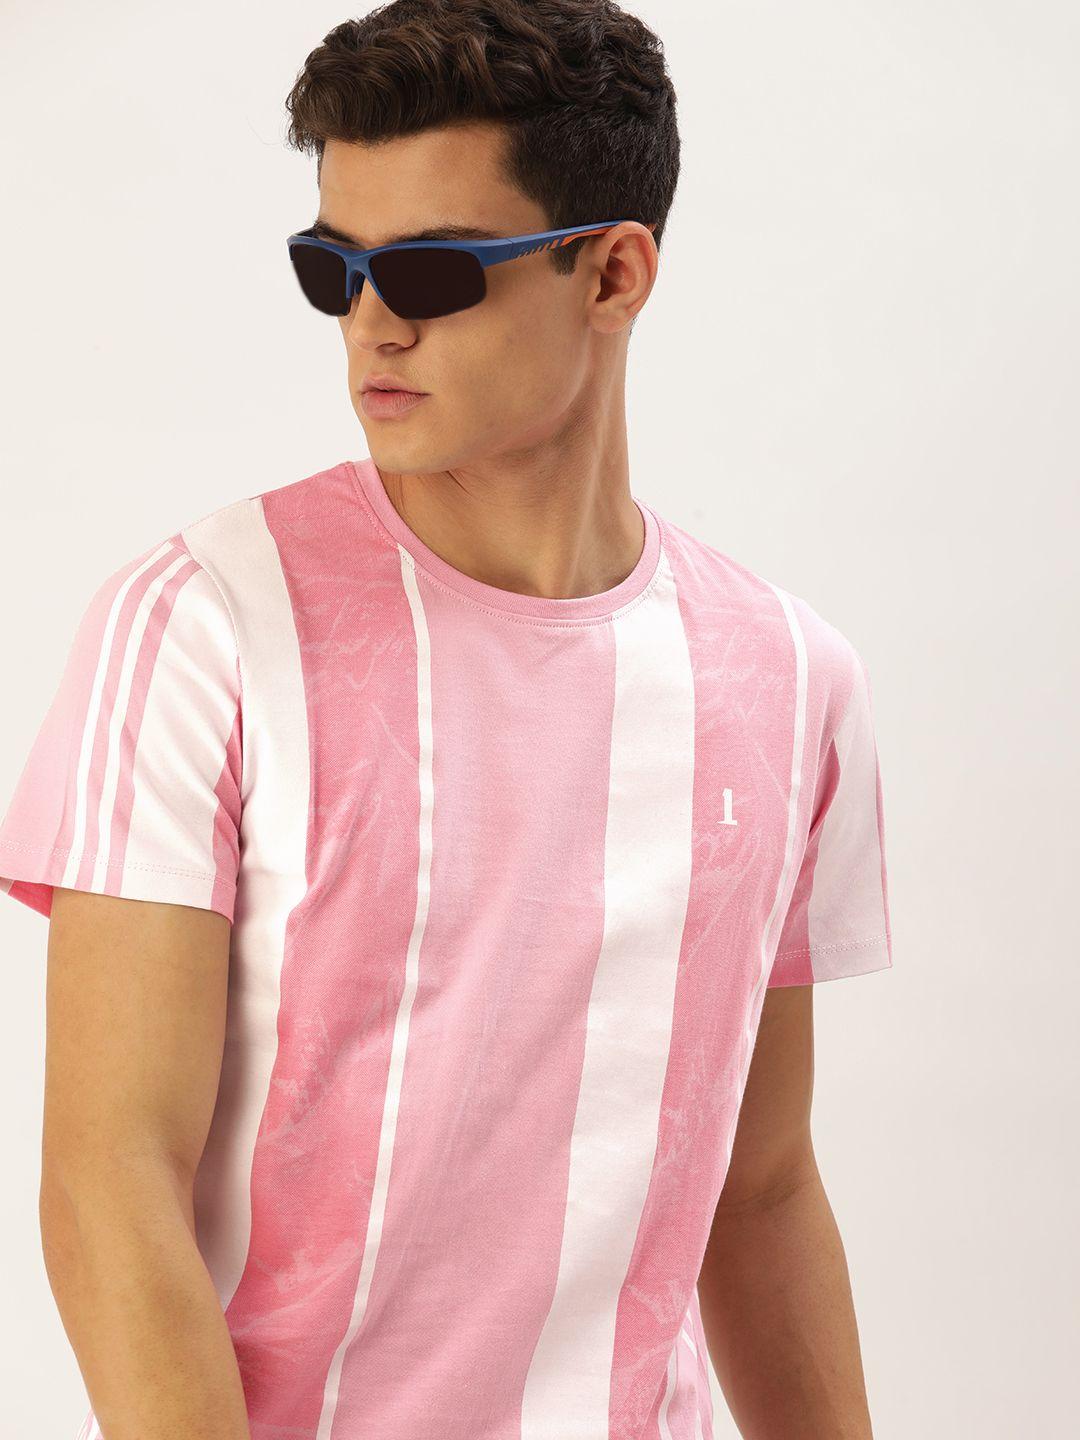 single men pink & white striped pure cotton t-shirt